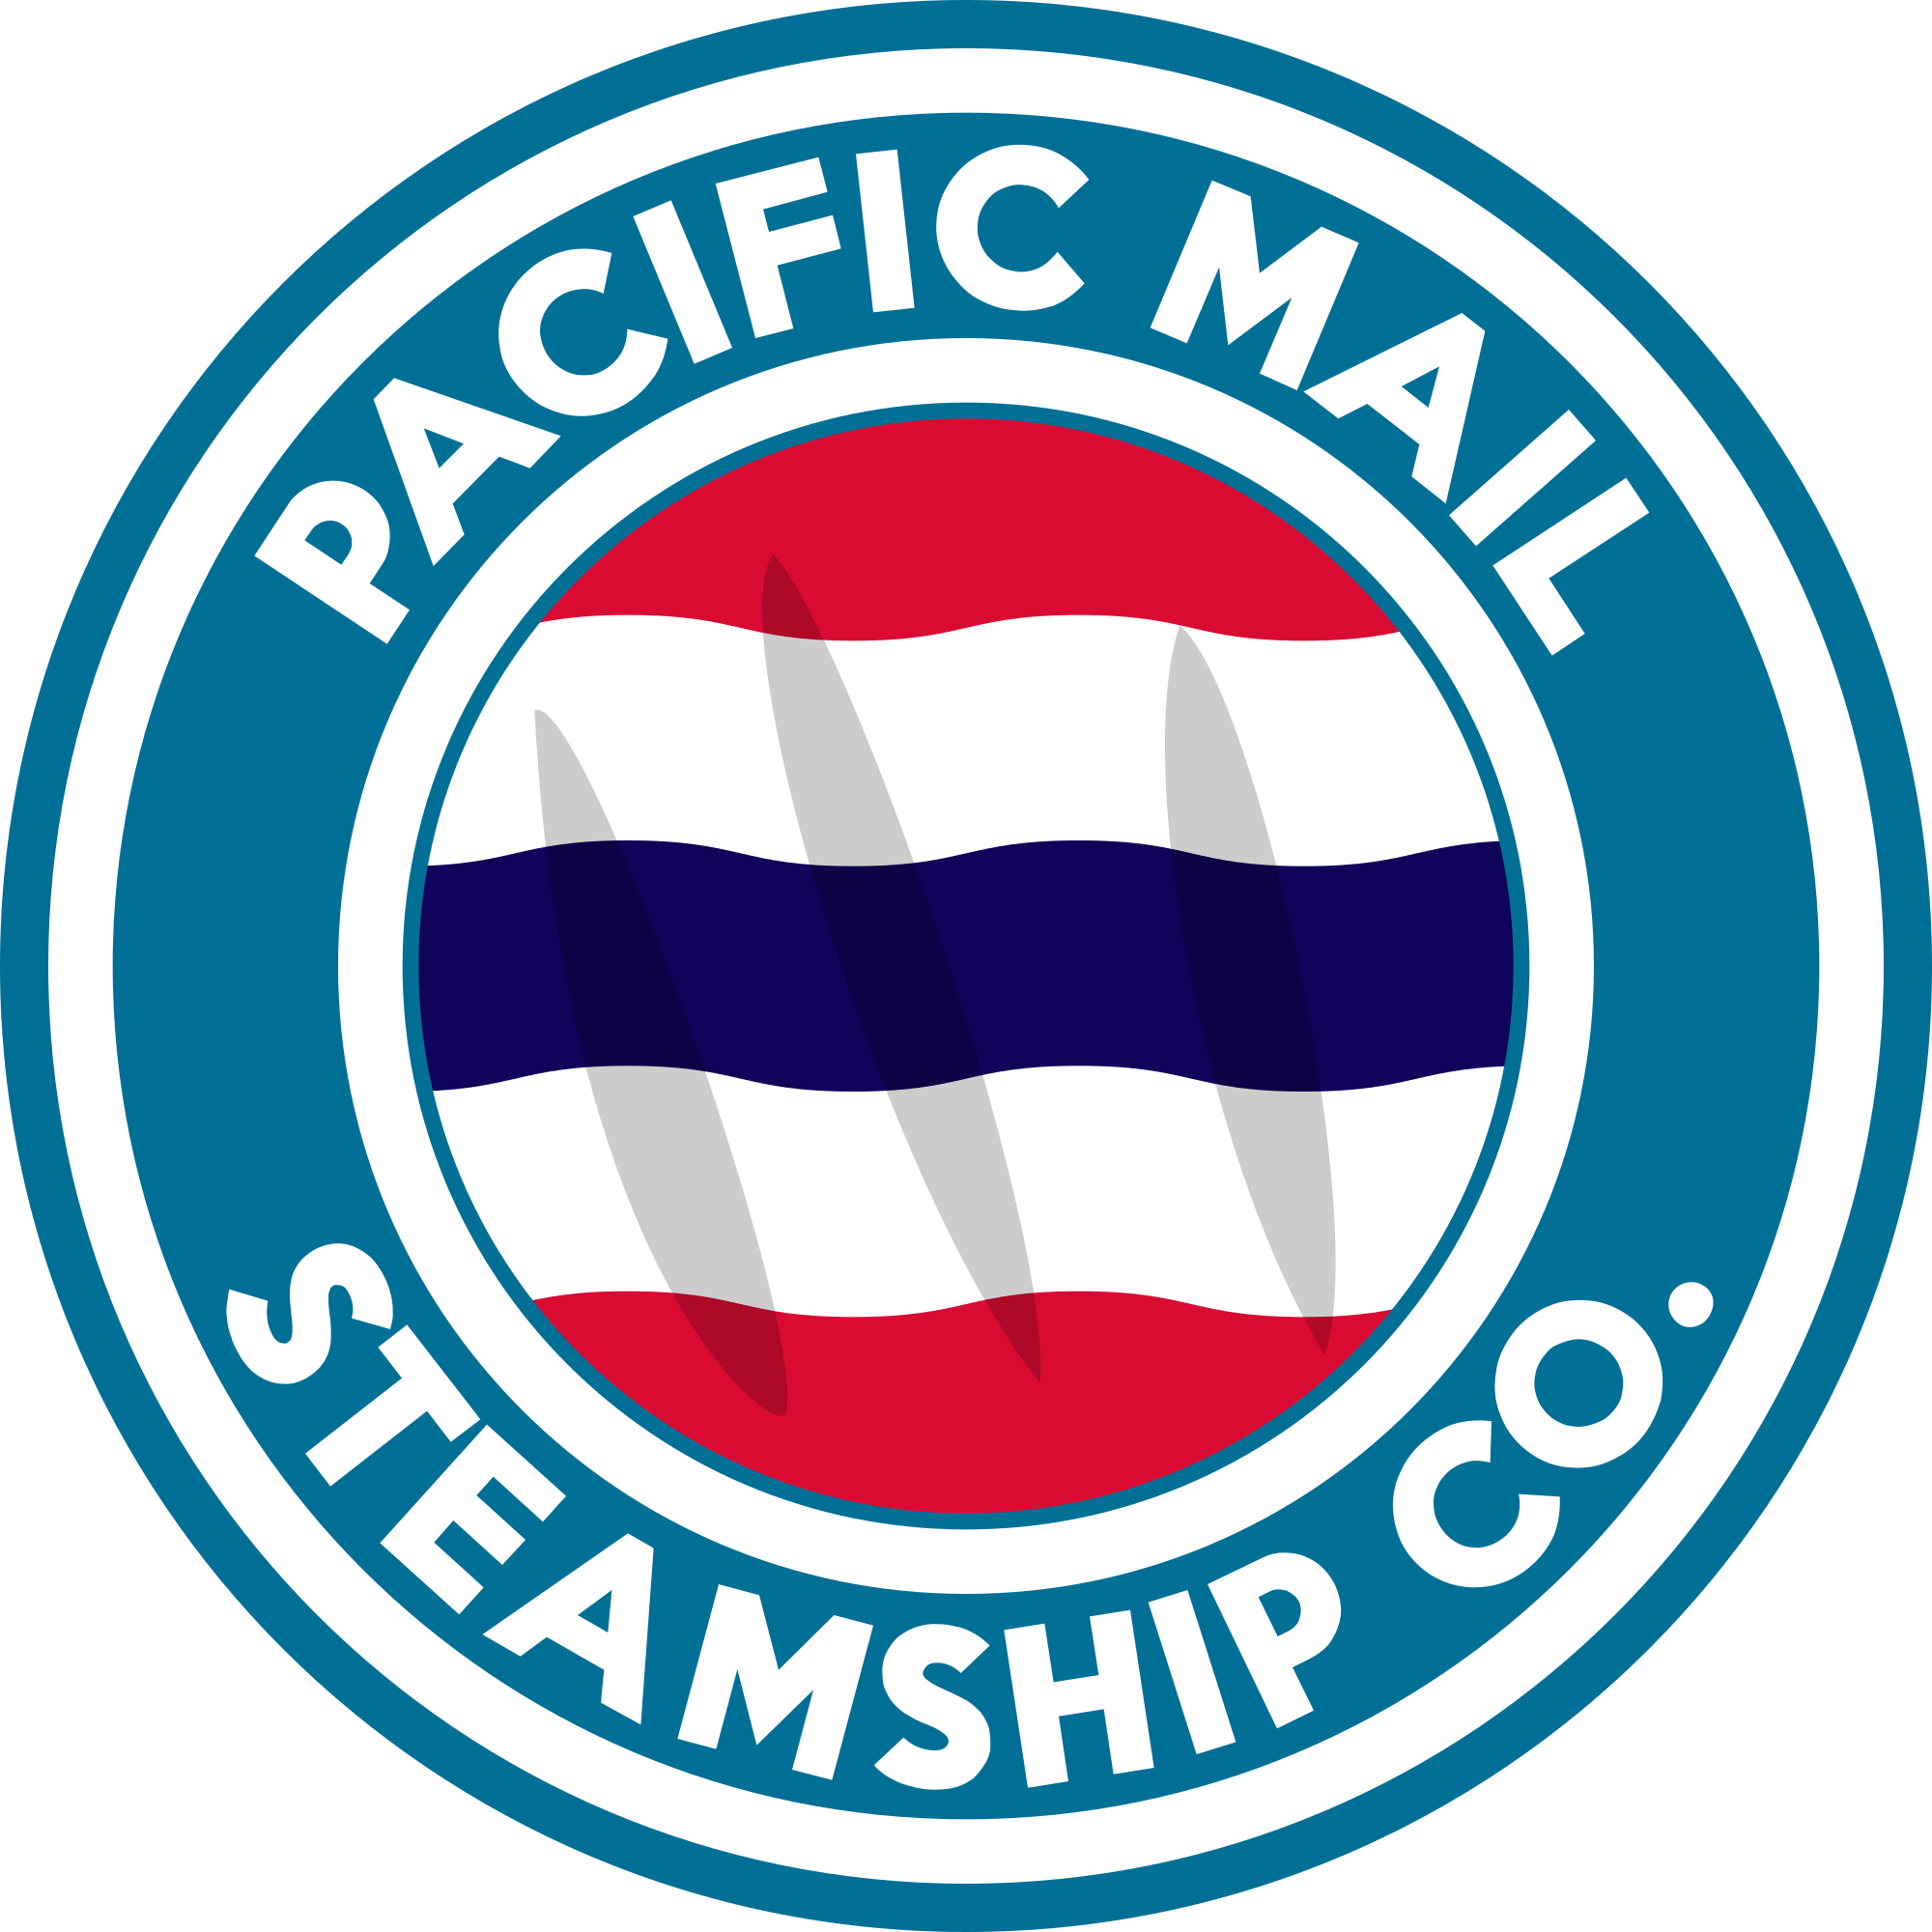 Mail Company Logo - File:Pacific Mail Steamship Company logo.svg - Wikimedia Commons